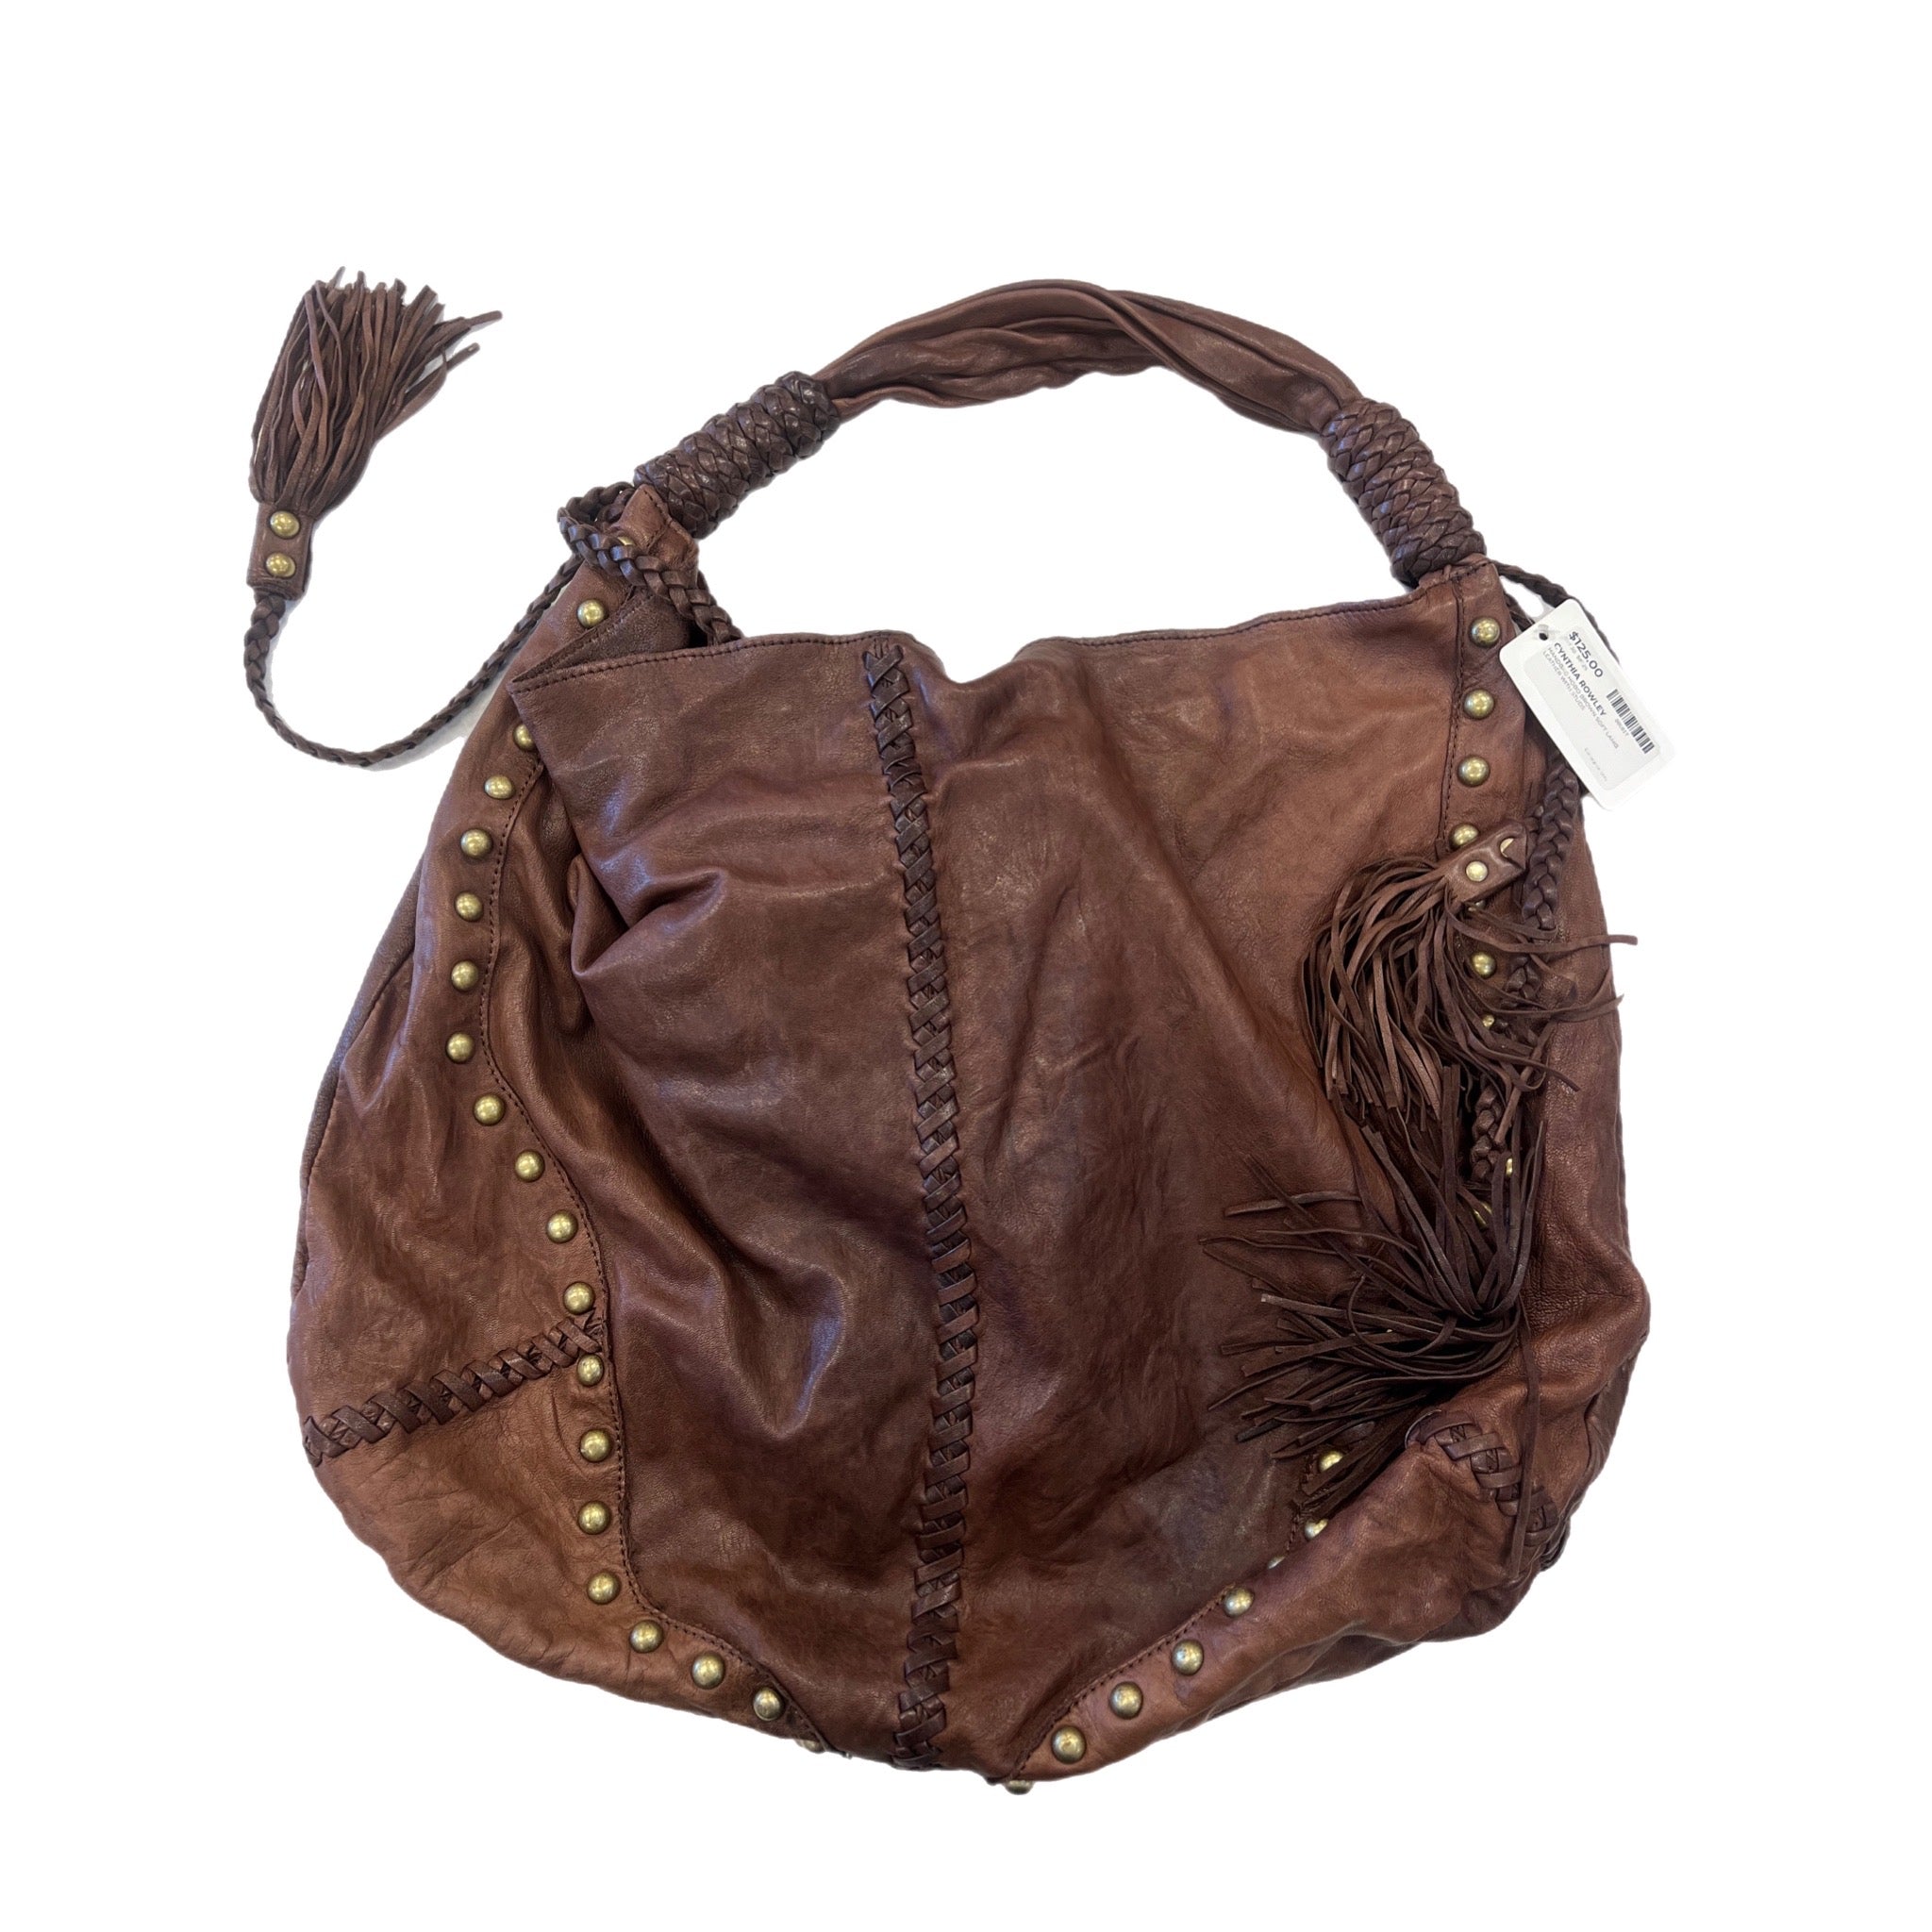 Cynthia Rowley | Bags | Cynthia Rowley Soft Brown Leather Tote Large Bag |  Poshmark